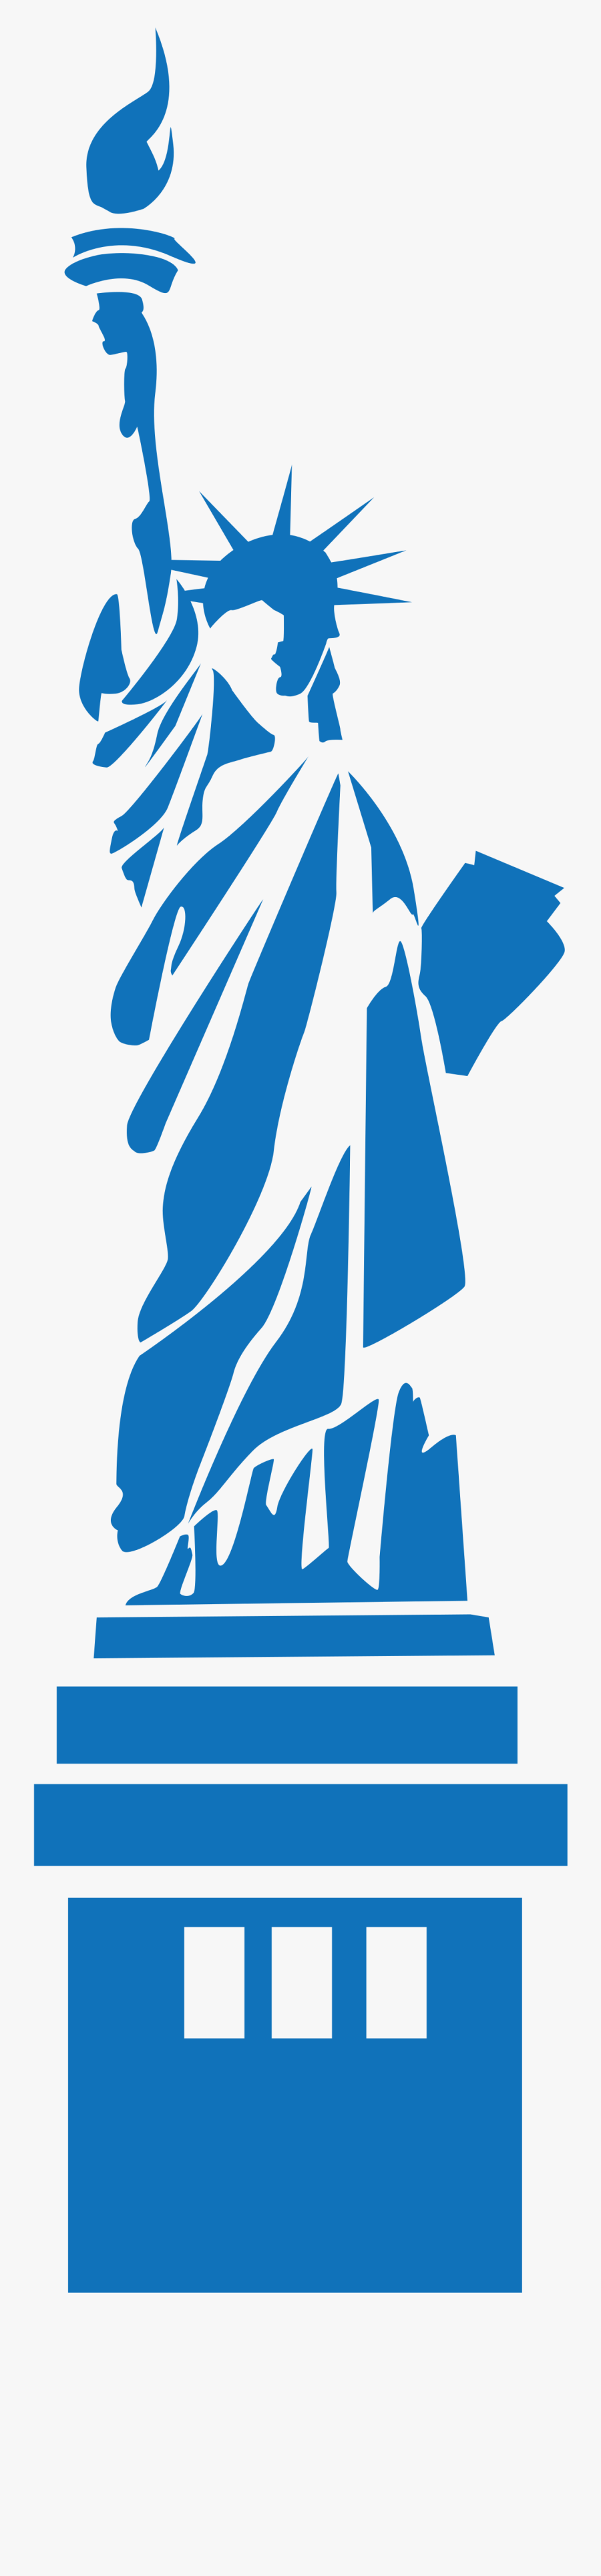 New York Statue Of Liberty Clip Arts - Statue Of Liberty Blue Clipart, Transparent Clipart